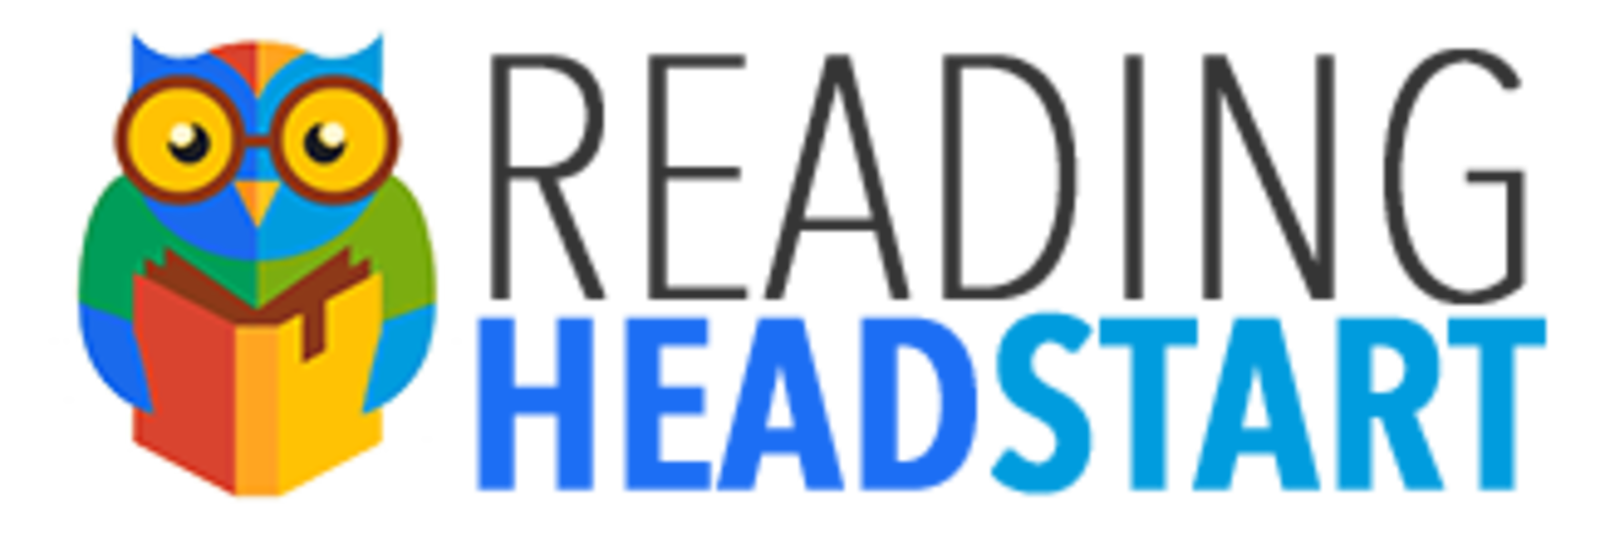 Sarah Shepard's Reading Head Start Reviews